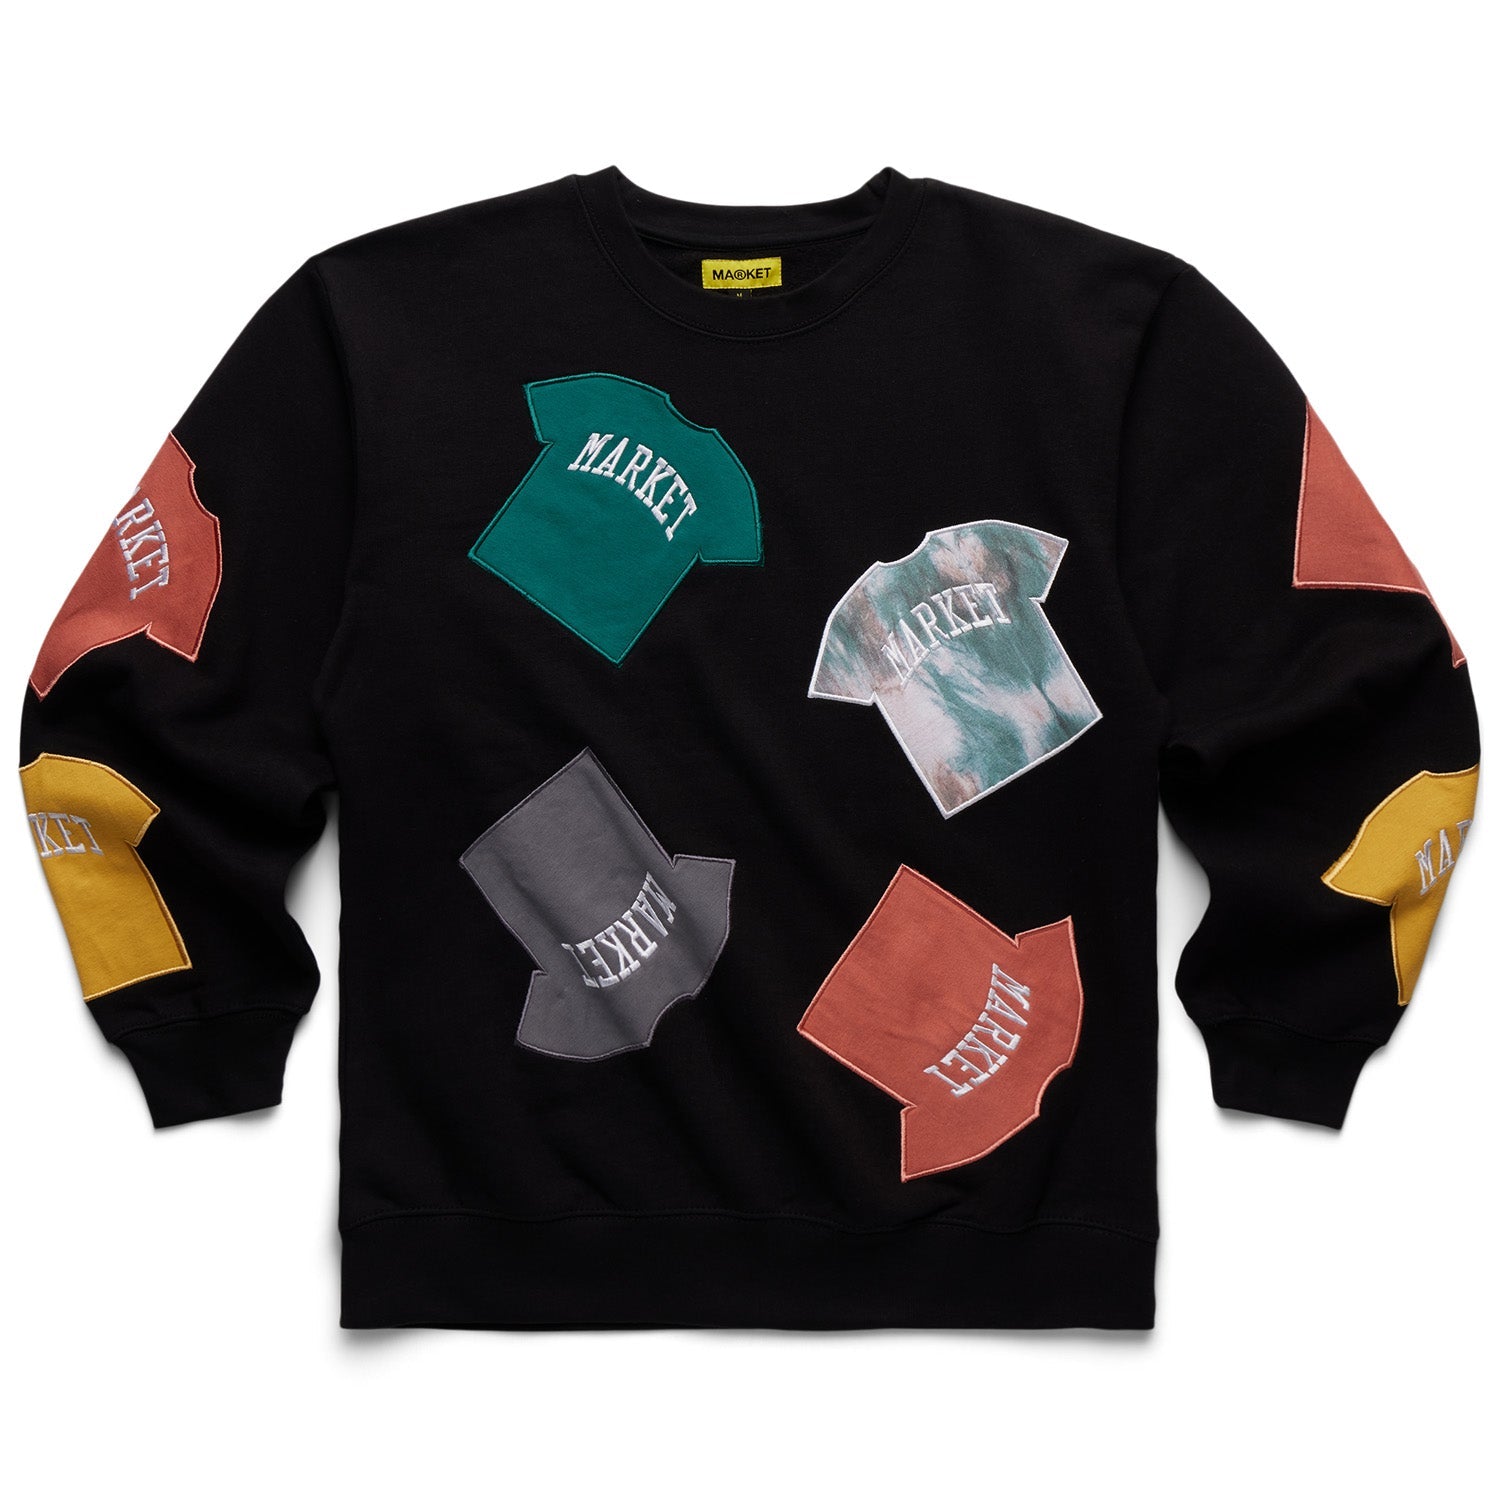 Market Men T-Shirt Patch Crewneck Sweatshirt Black - SWEATERS - Canada